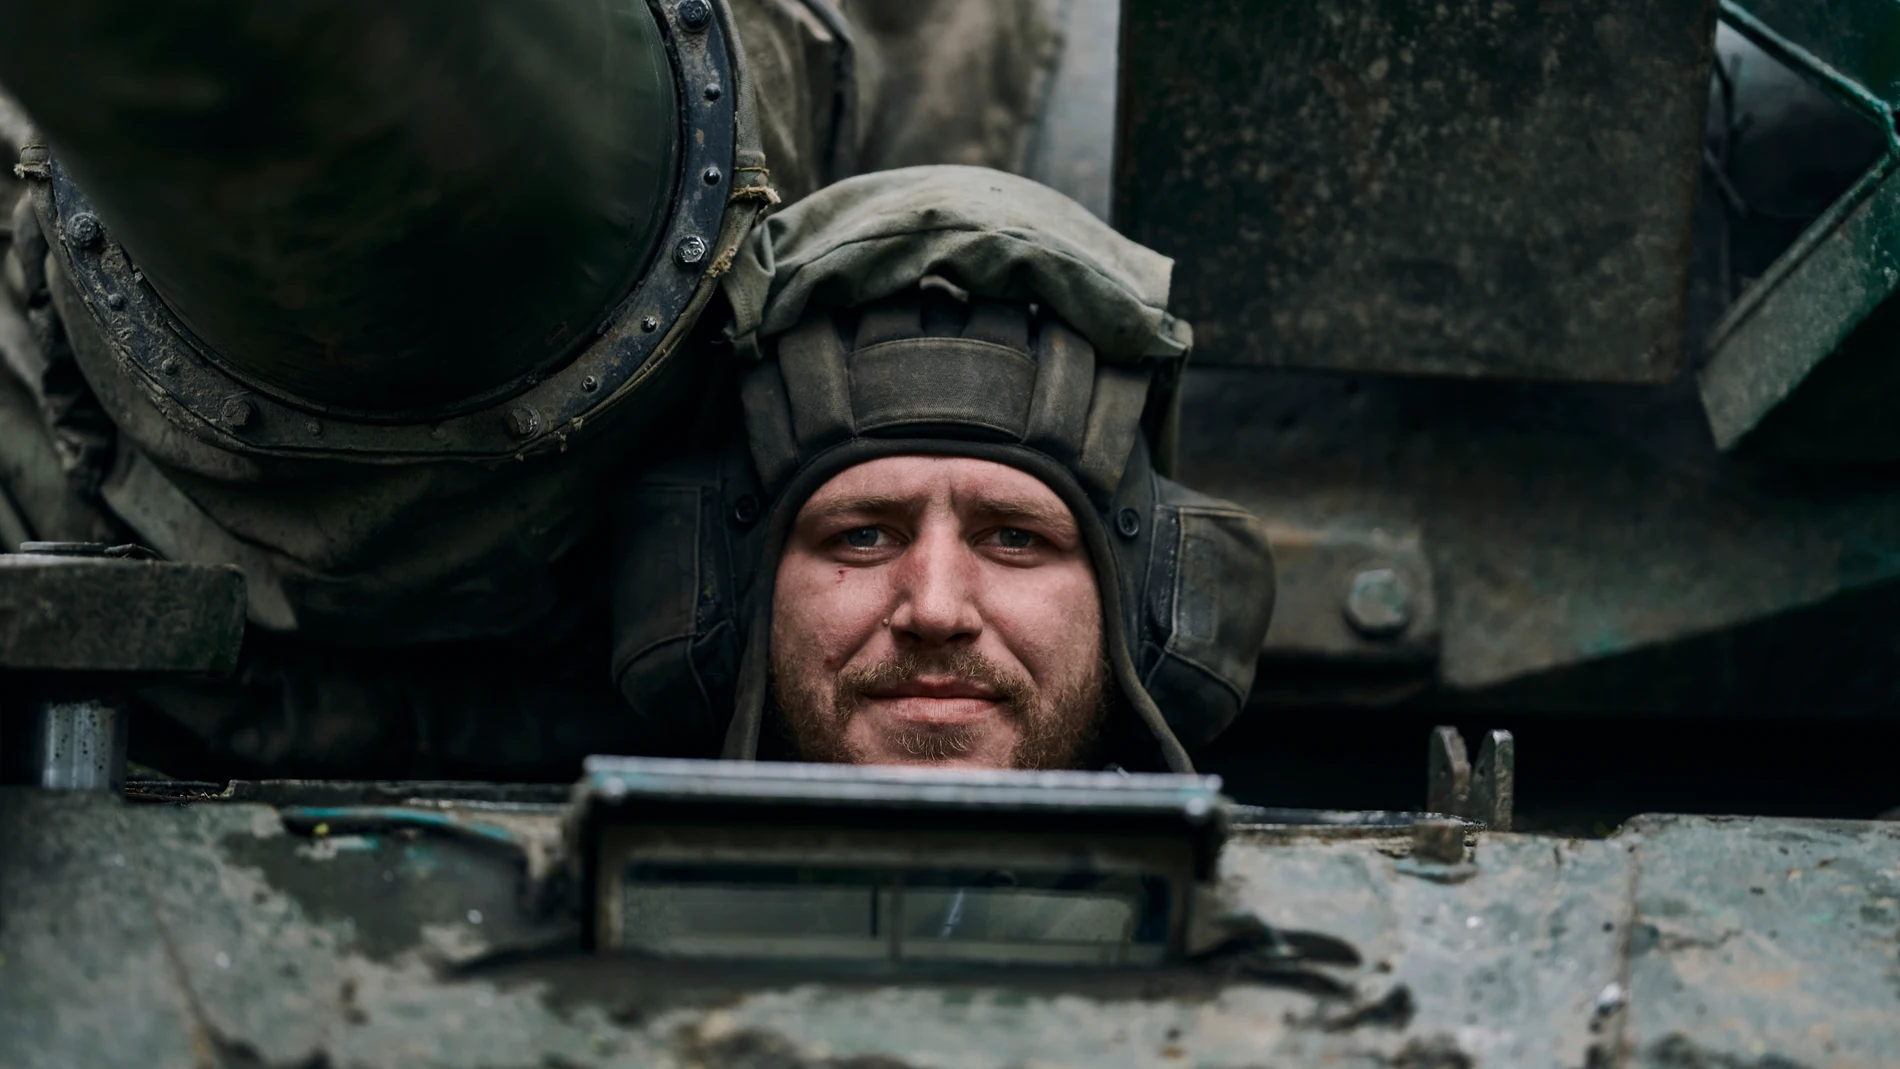 A Ukrainian soldier looks out of a tank on the frontline in Bakhmut, Donetsk region, Ukraine, Sunday, April 23, 2023. (AP Photo/Libkos)